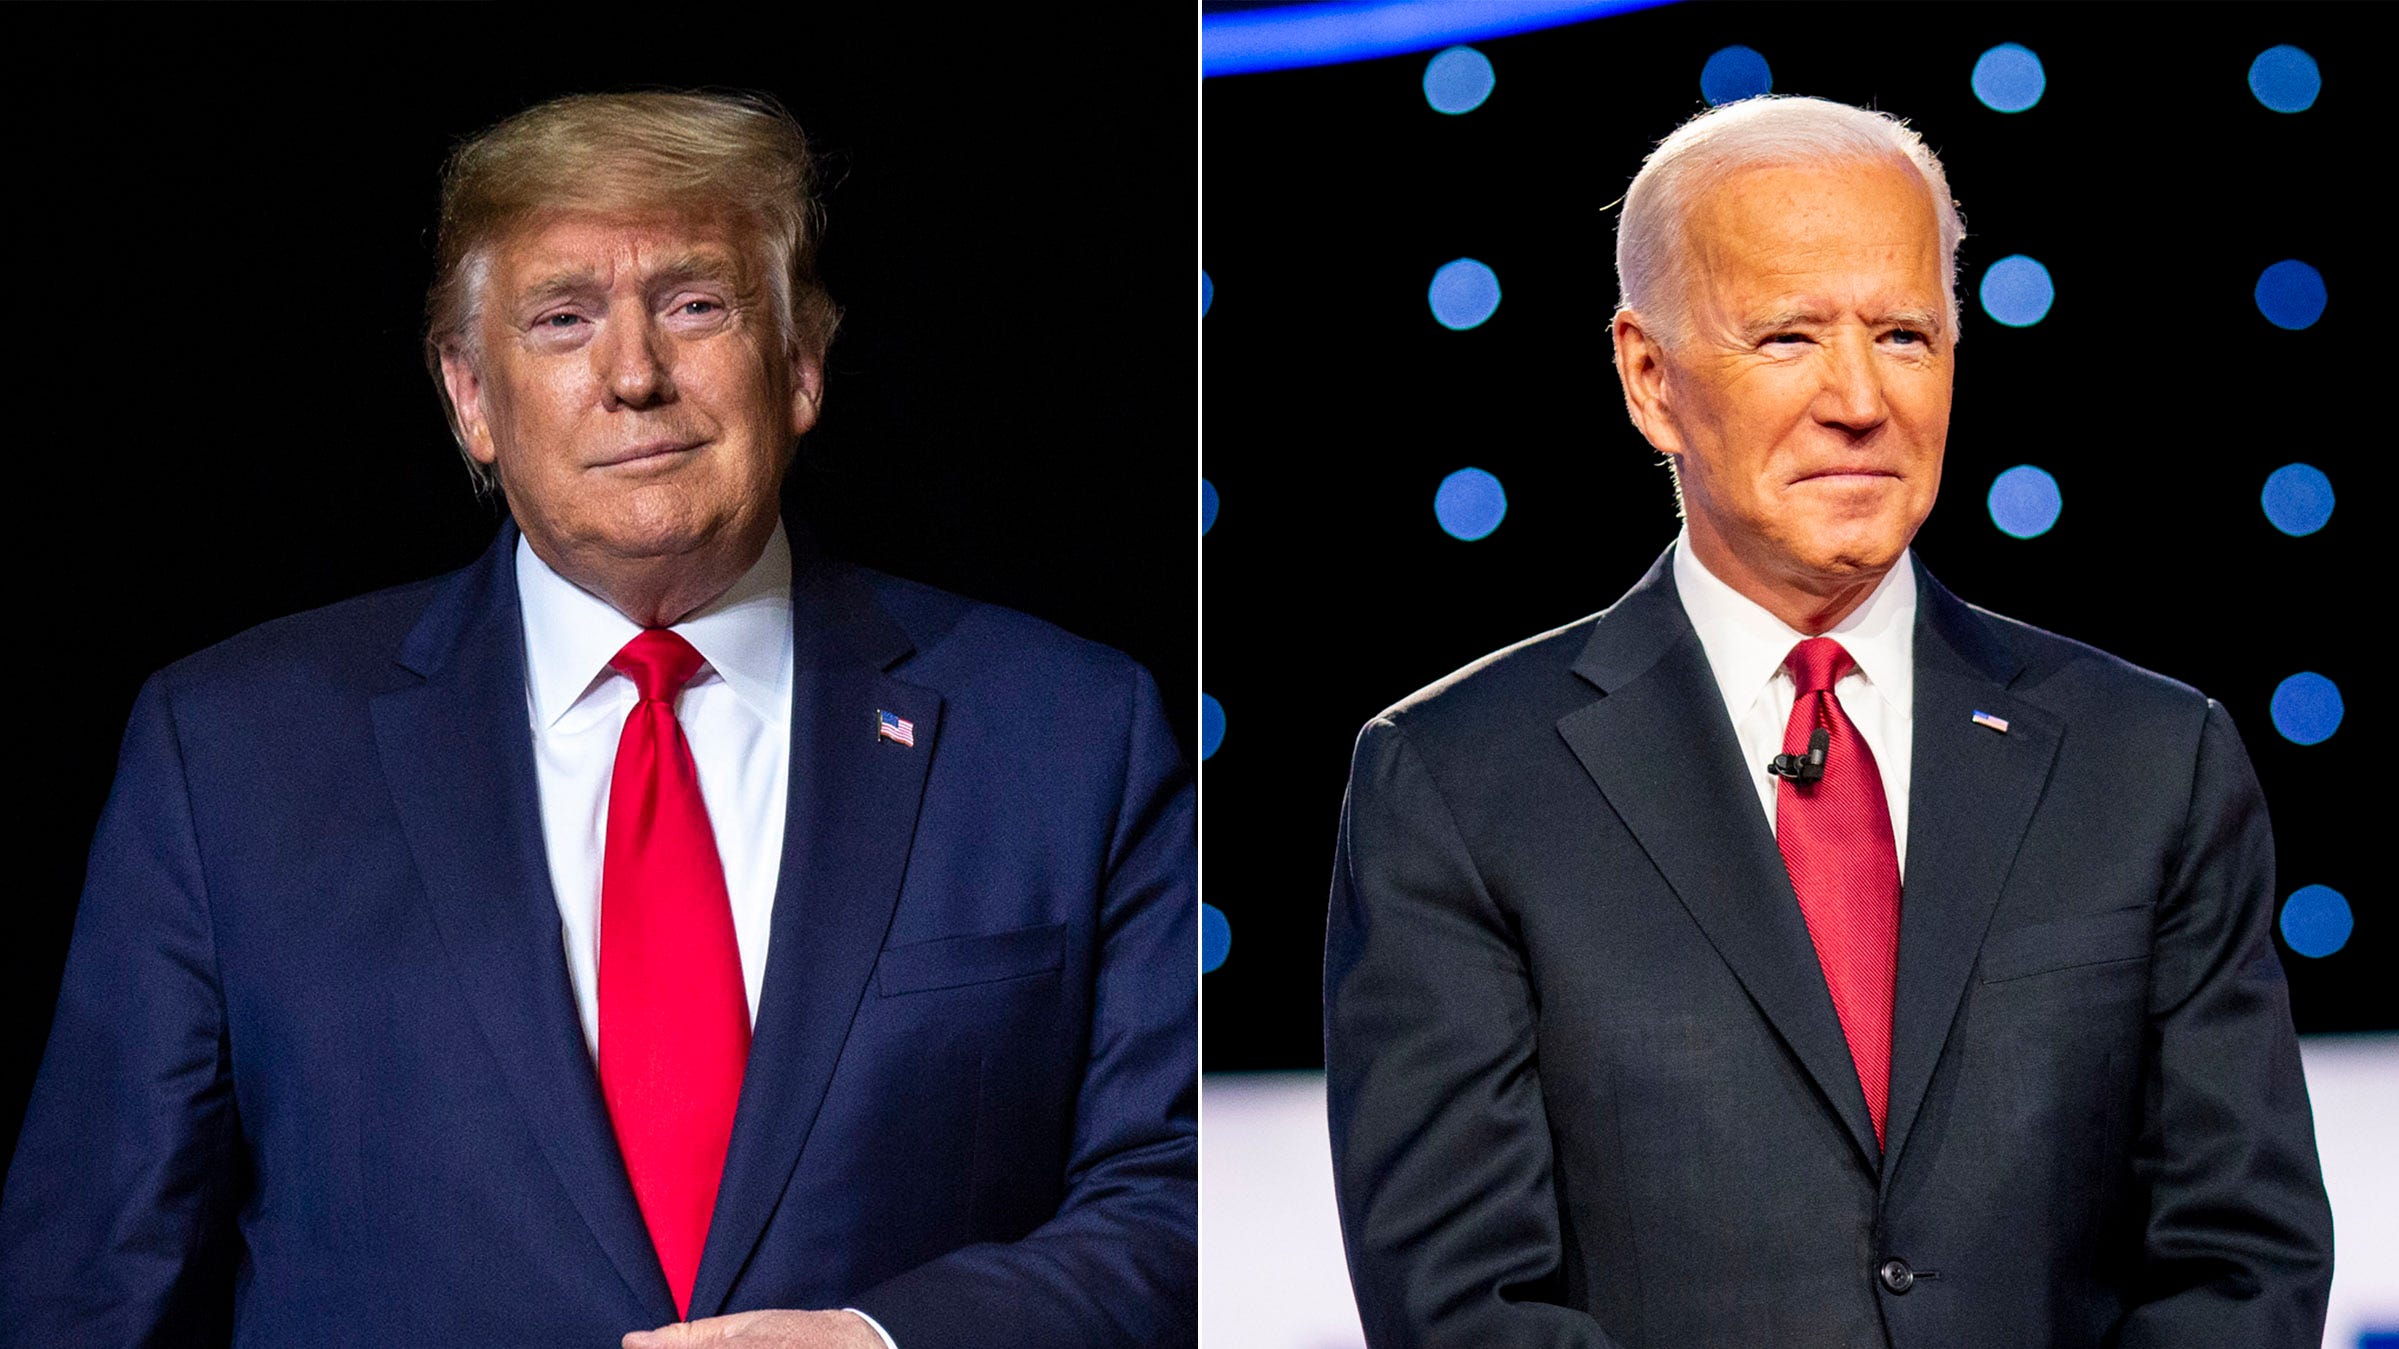 Poll: More pick Trump over Joe Biden to win presidential debates